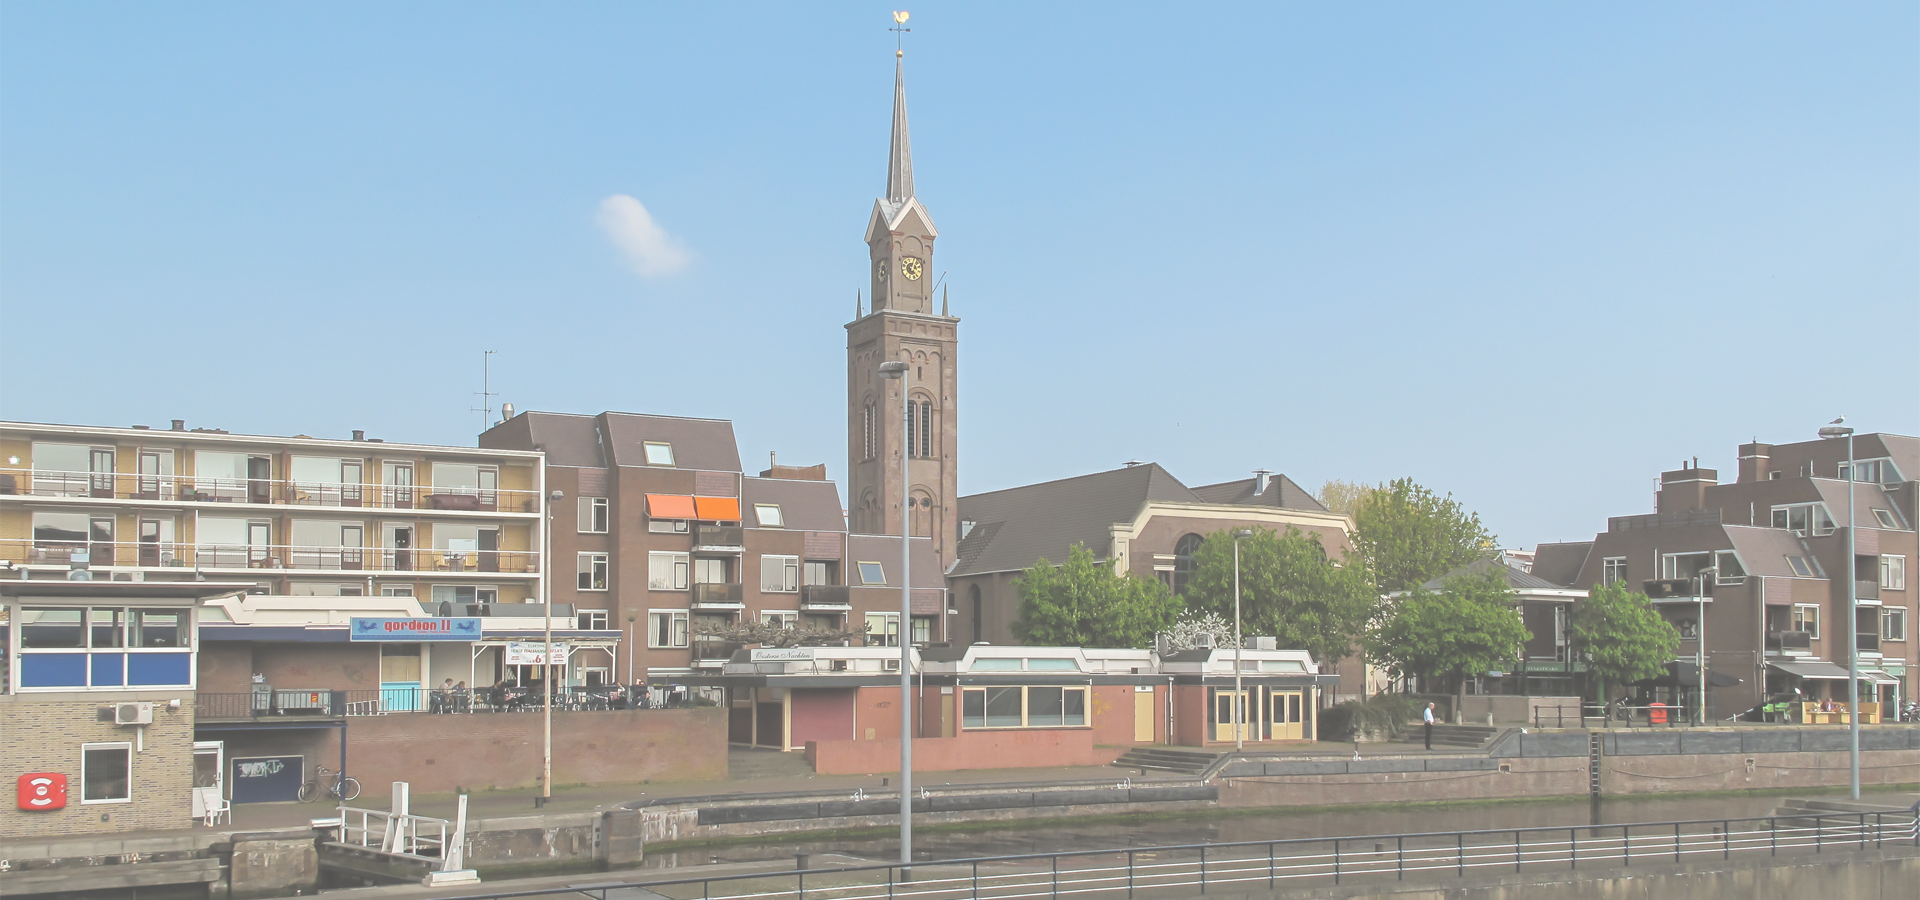 <b>Zaandam, North Holland, Netherlands</b>